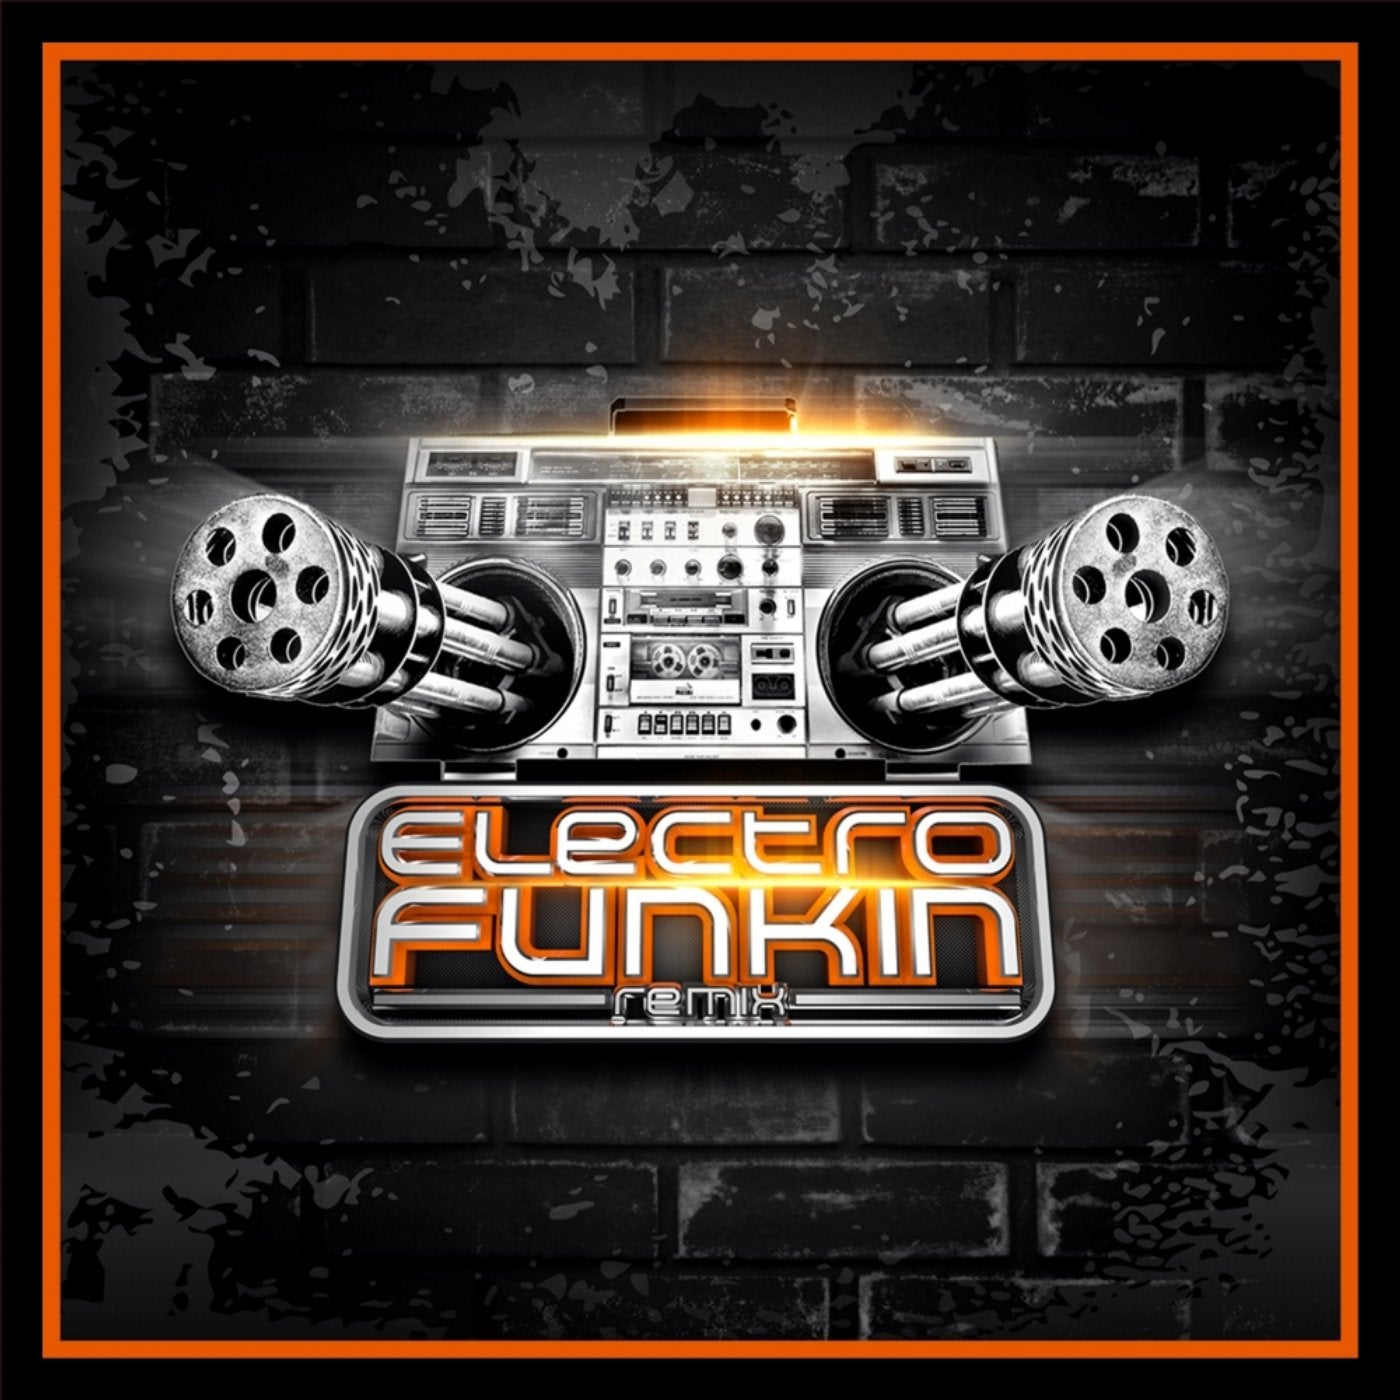 Electro Funk Remix (Charge Remix)